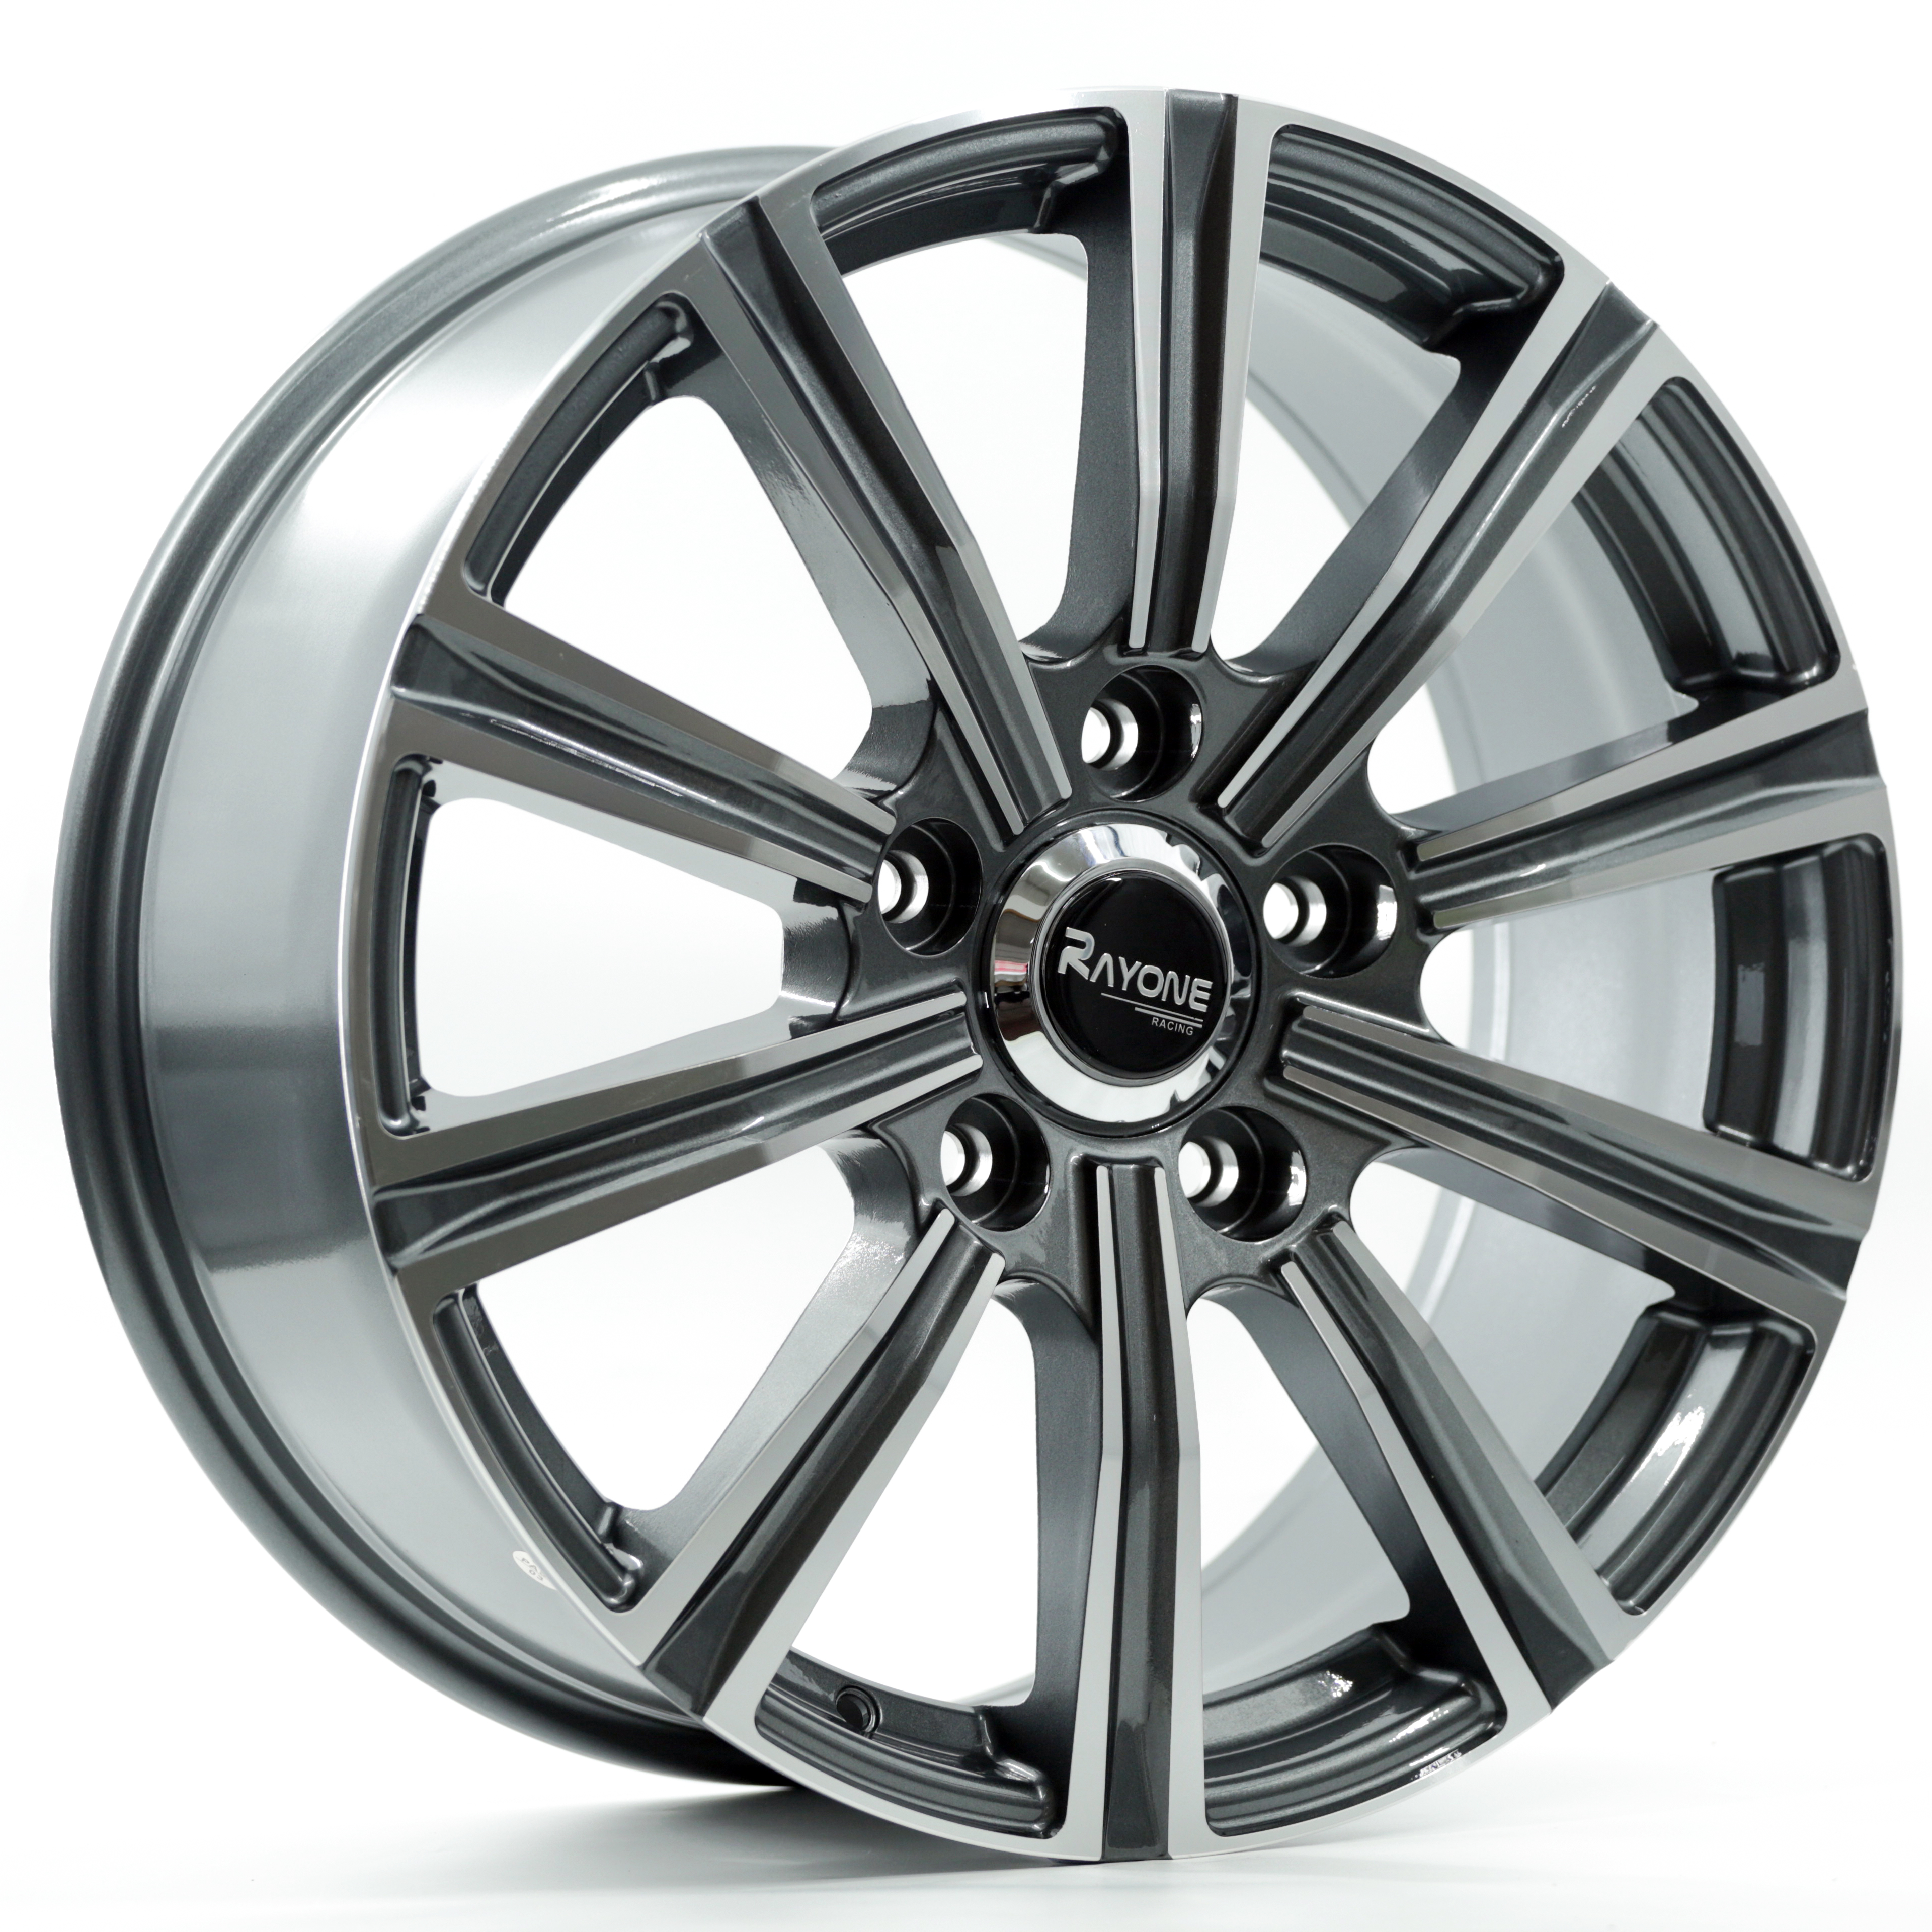 Rayone Wheels Factory A061 20×8.5 5×150 Aluminum Alloy Wheels For Toyota/Lexus Japan Car